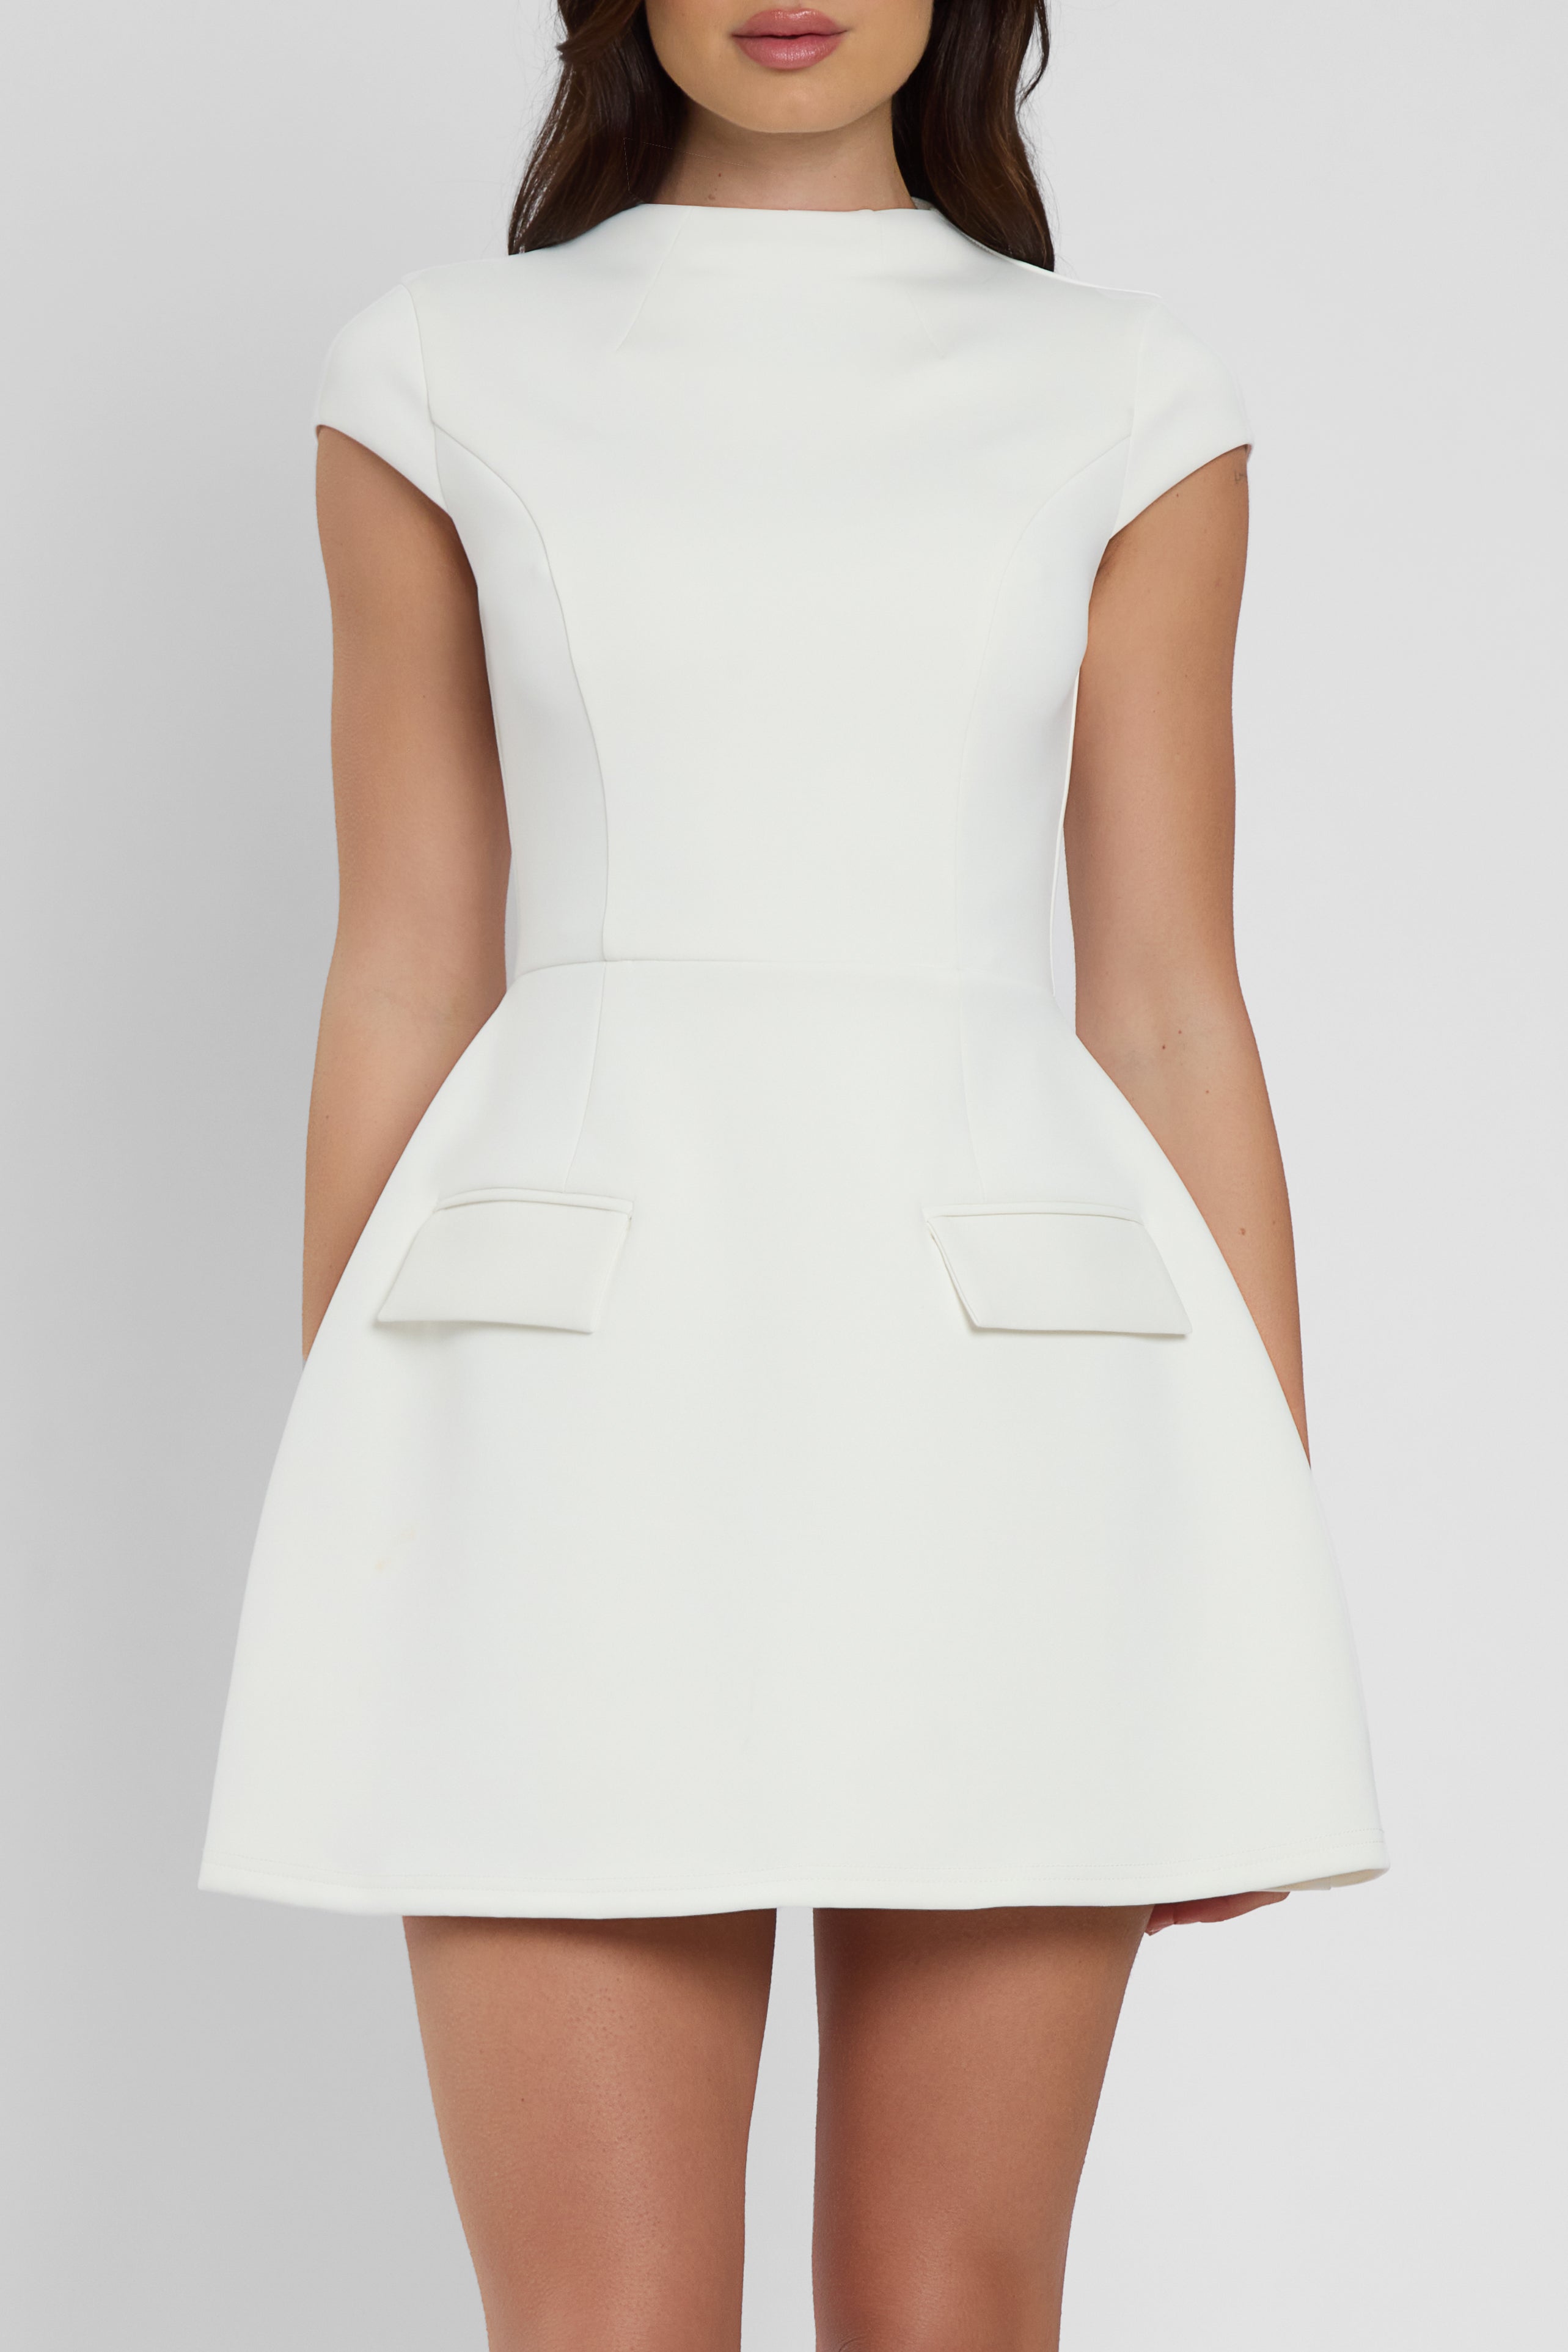 Cote Cap Sleeve Pocket Mini Dress - White.